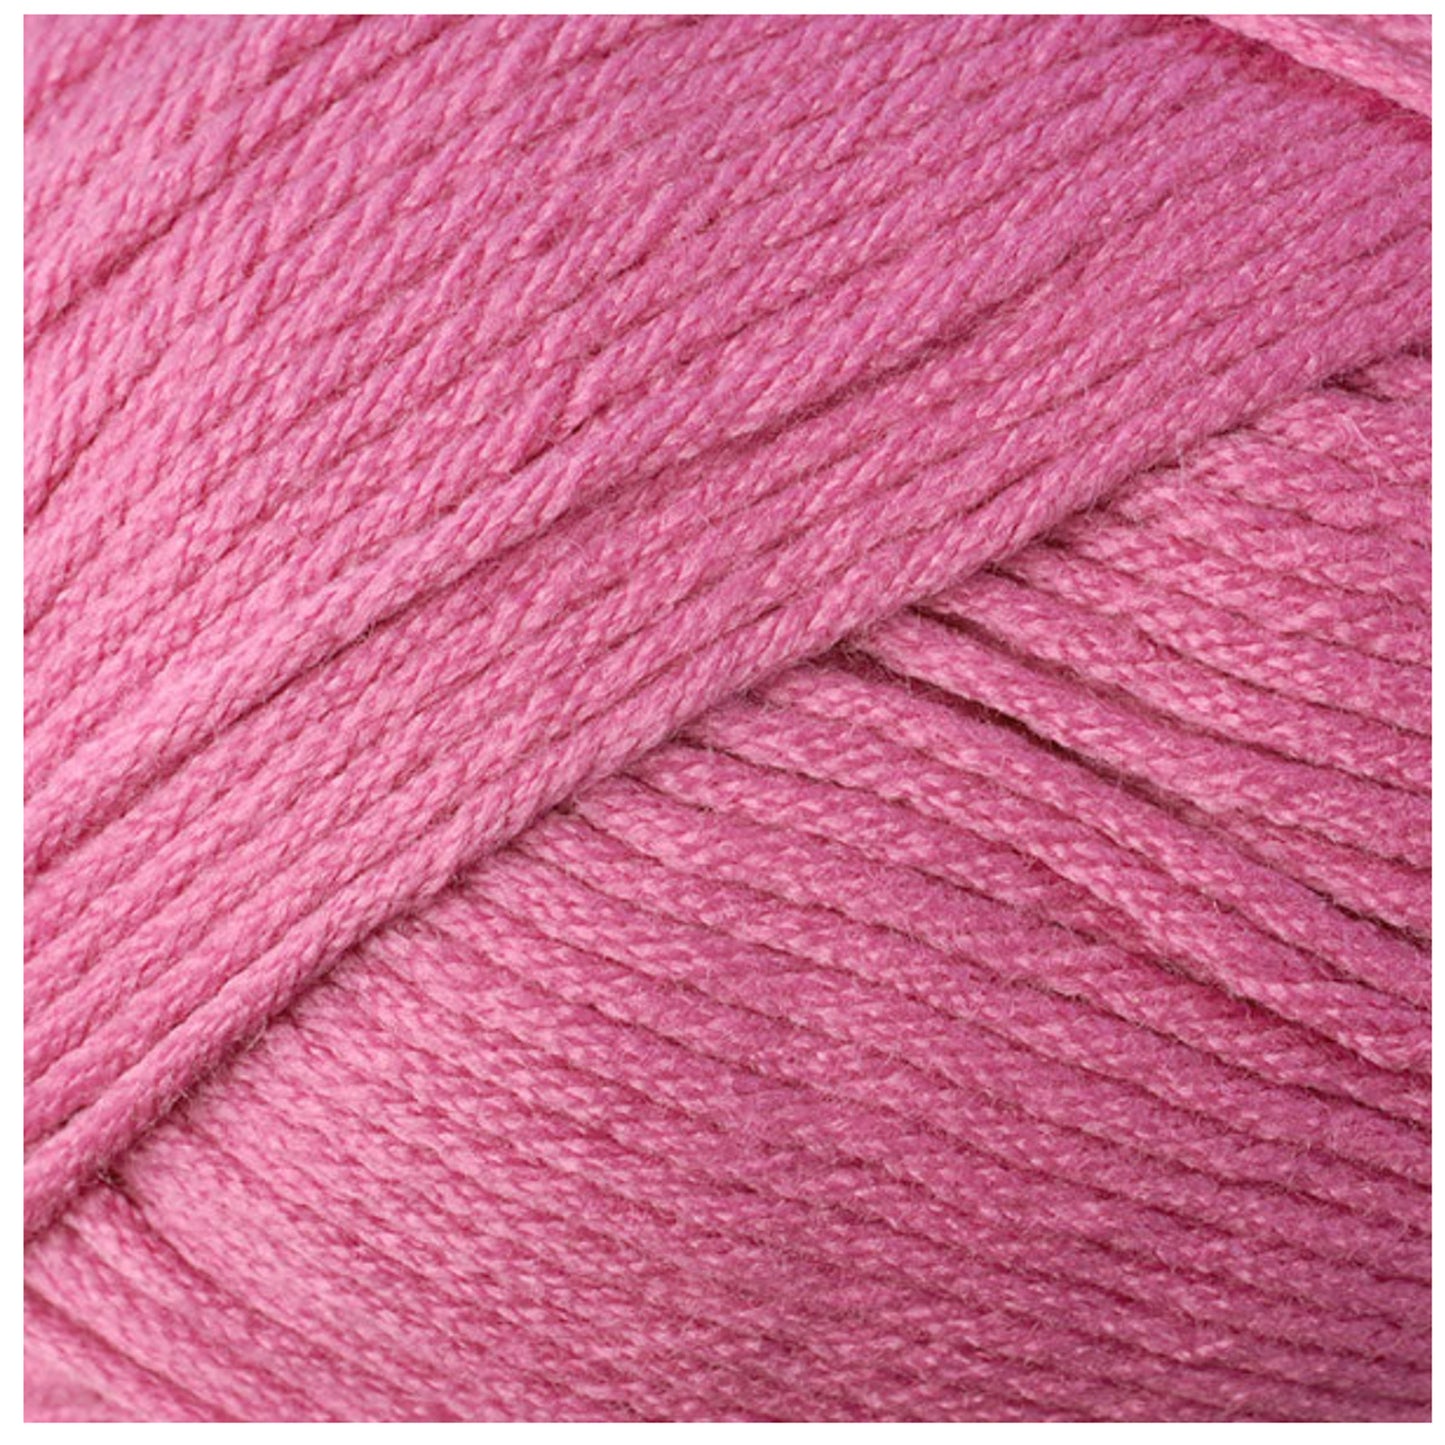 Colorful Crochet Skirt/Cowl - L/1X/2X/3X/4X - Dream Color Crochet Kit Alternative View #2